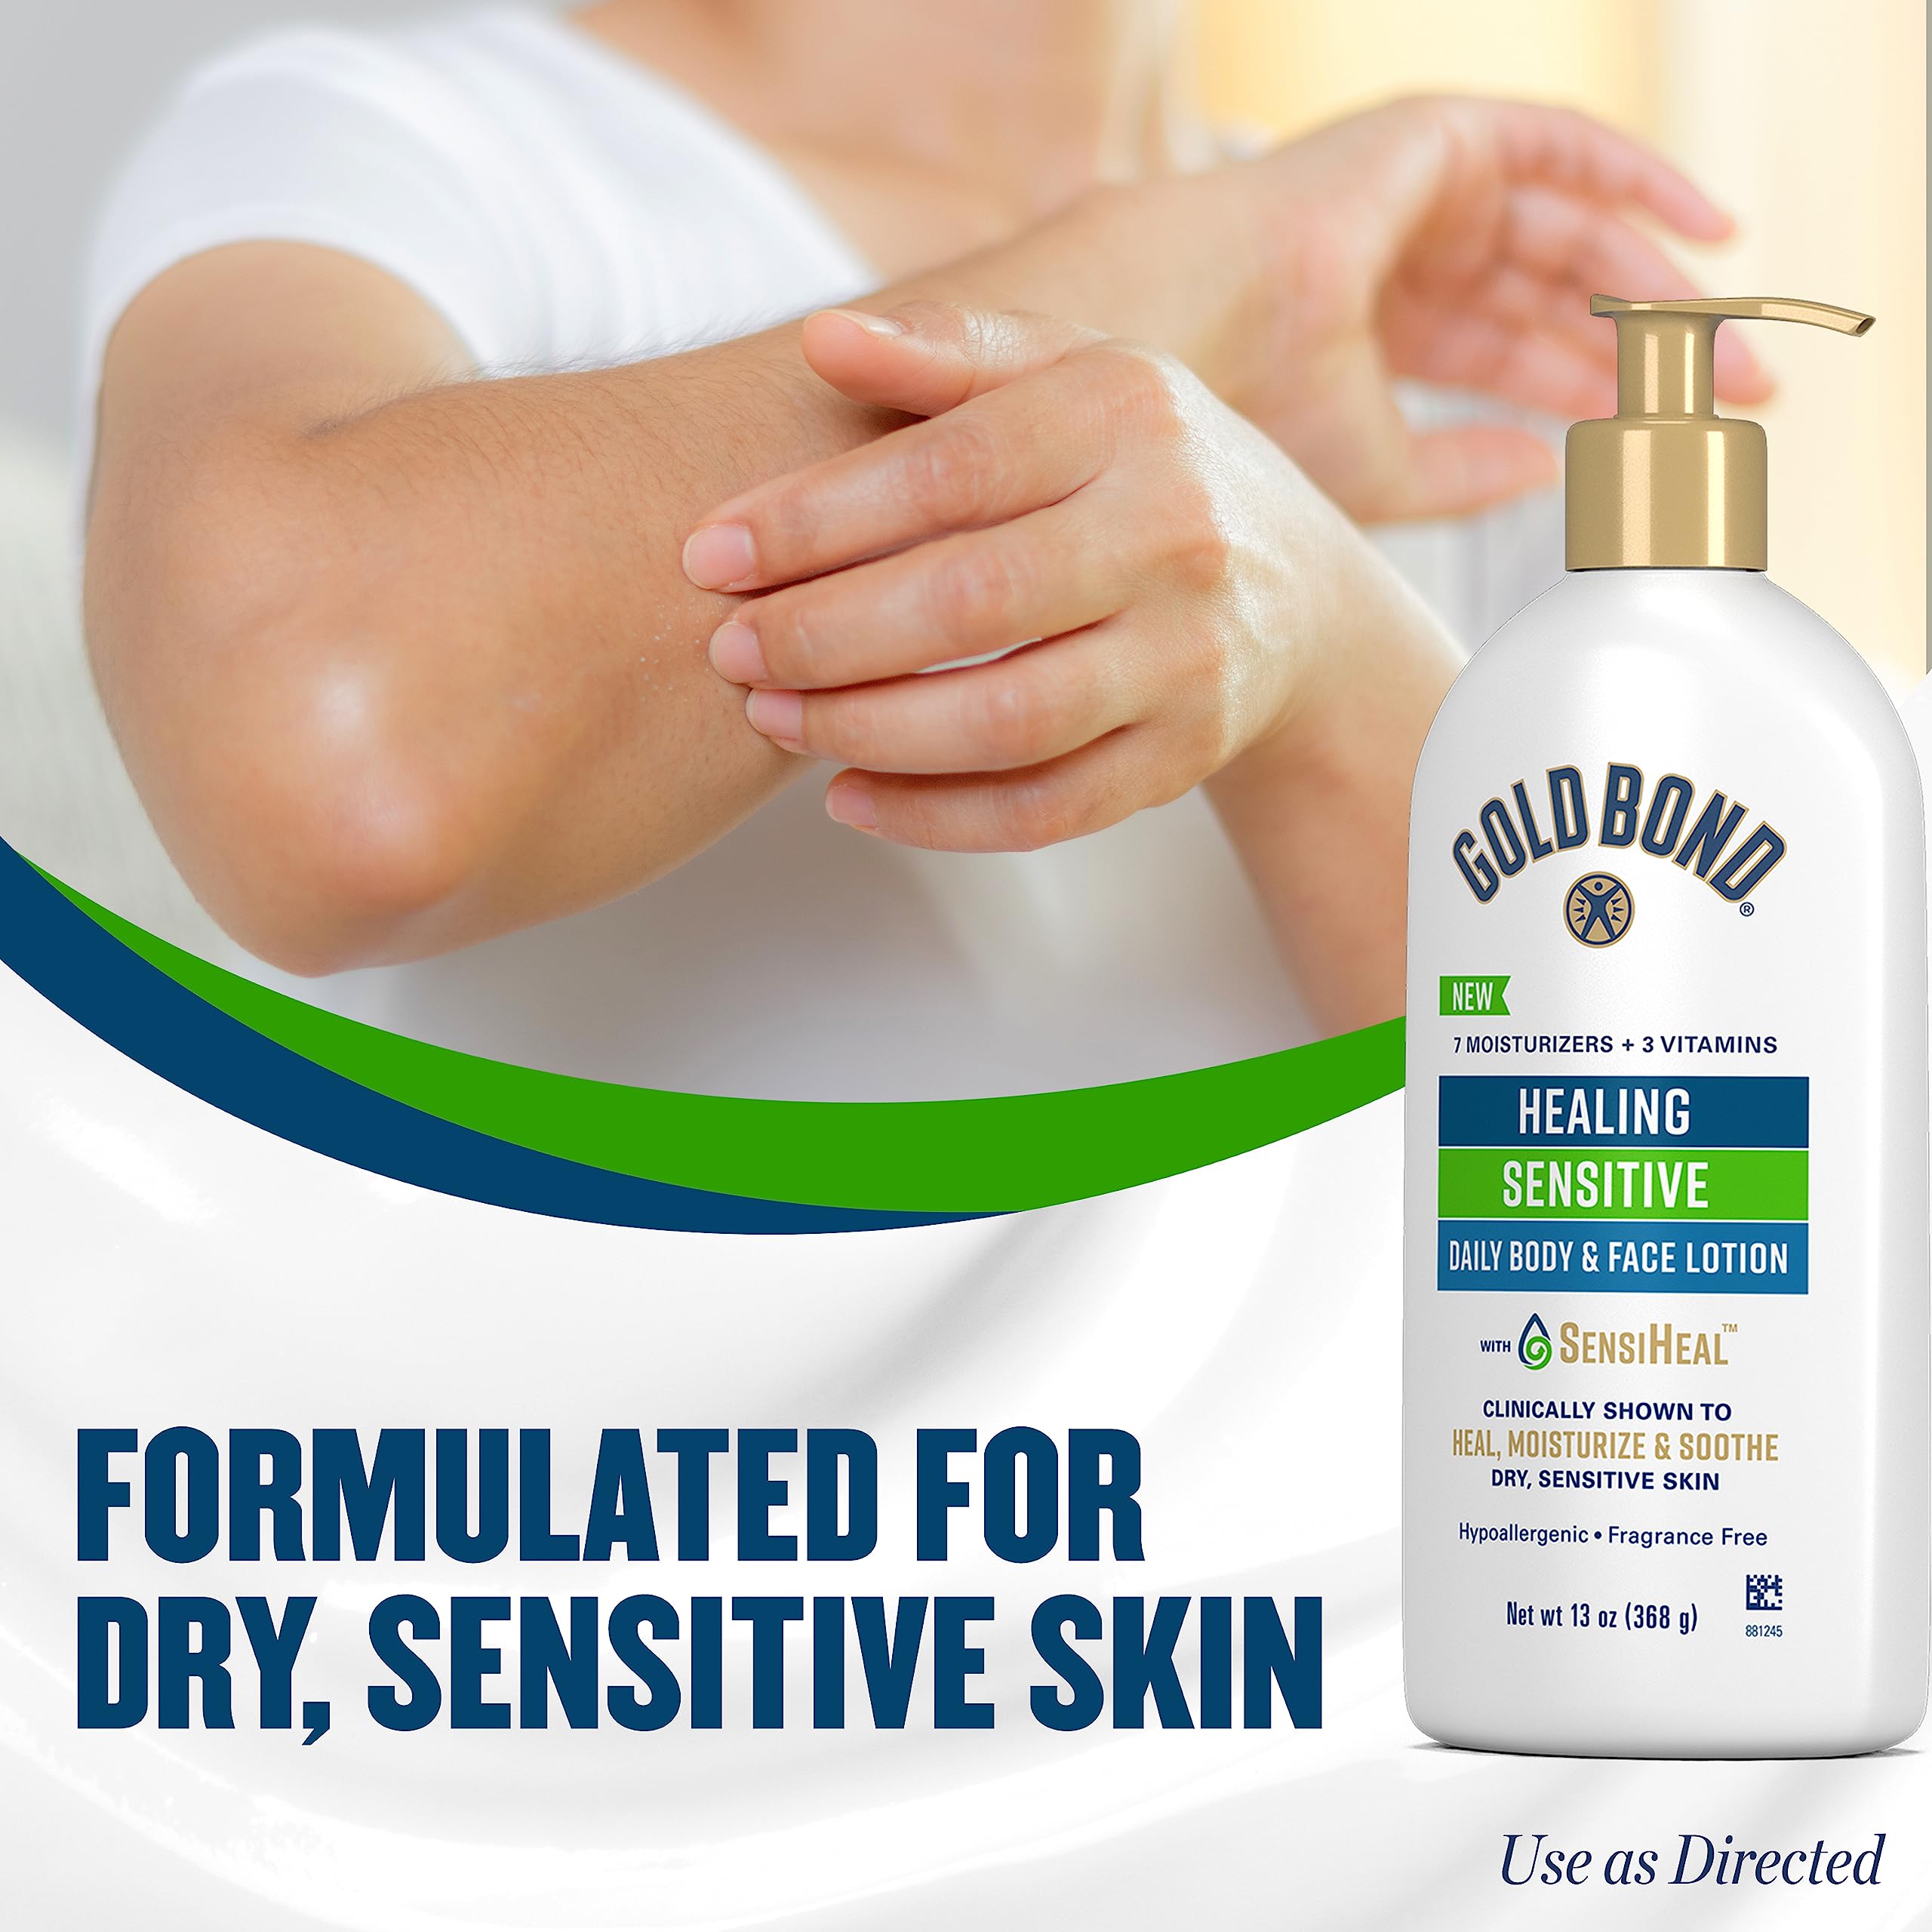 Gold Bond Healing Sensitive Daily Body & Face Lotion for Dry, Sensitive Skin, 13 oz.